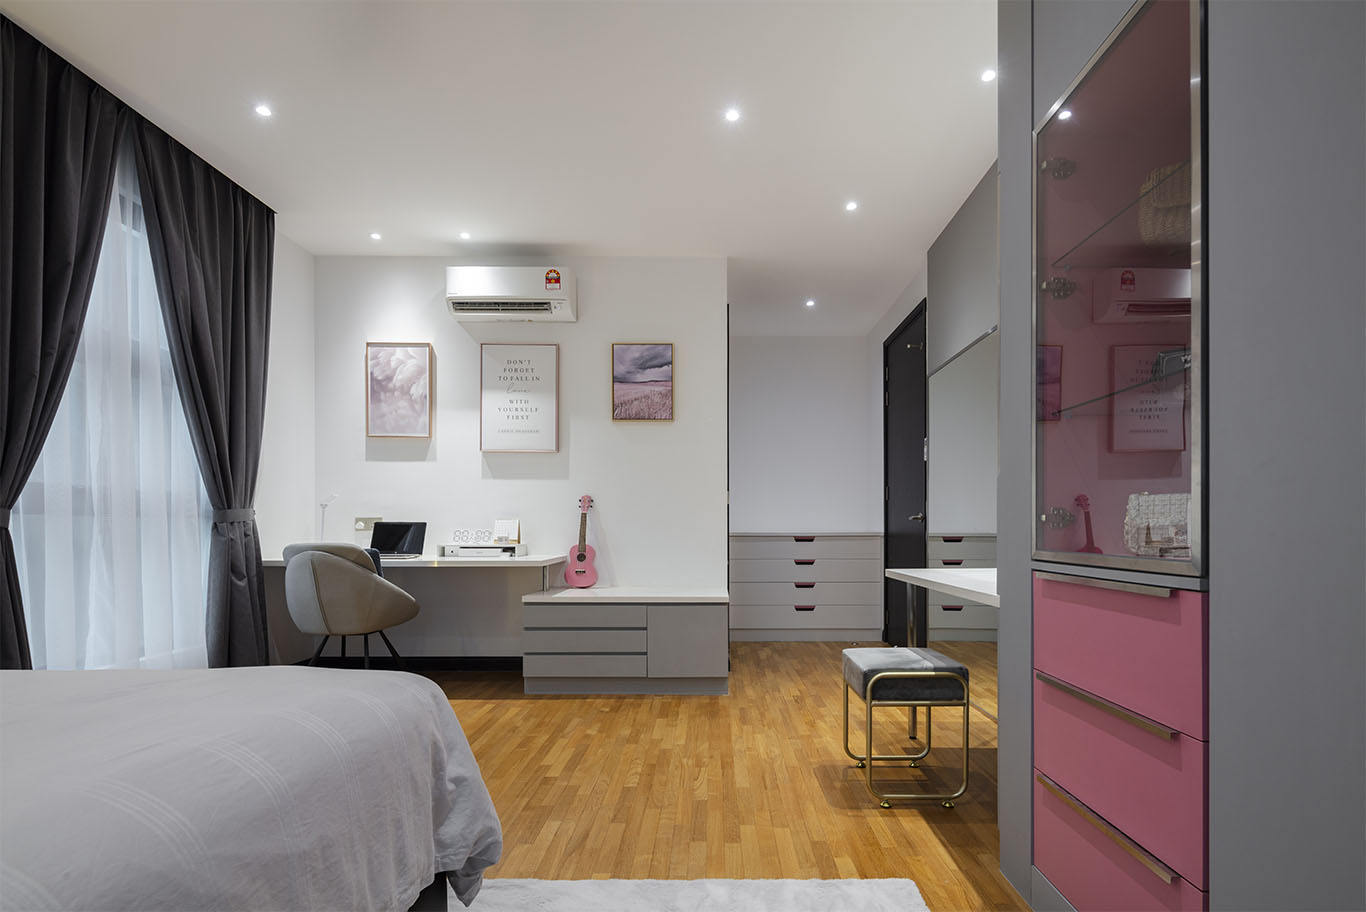 MIEUX La Famillie De Lee modern bedroom design with hidden curtain and wooden floor 6 mieux interior design